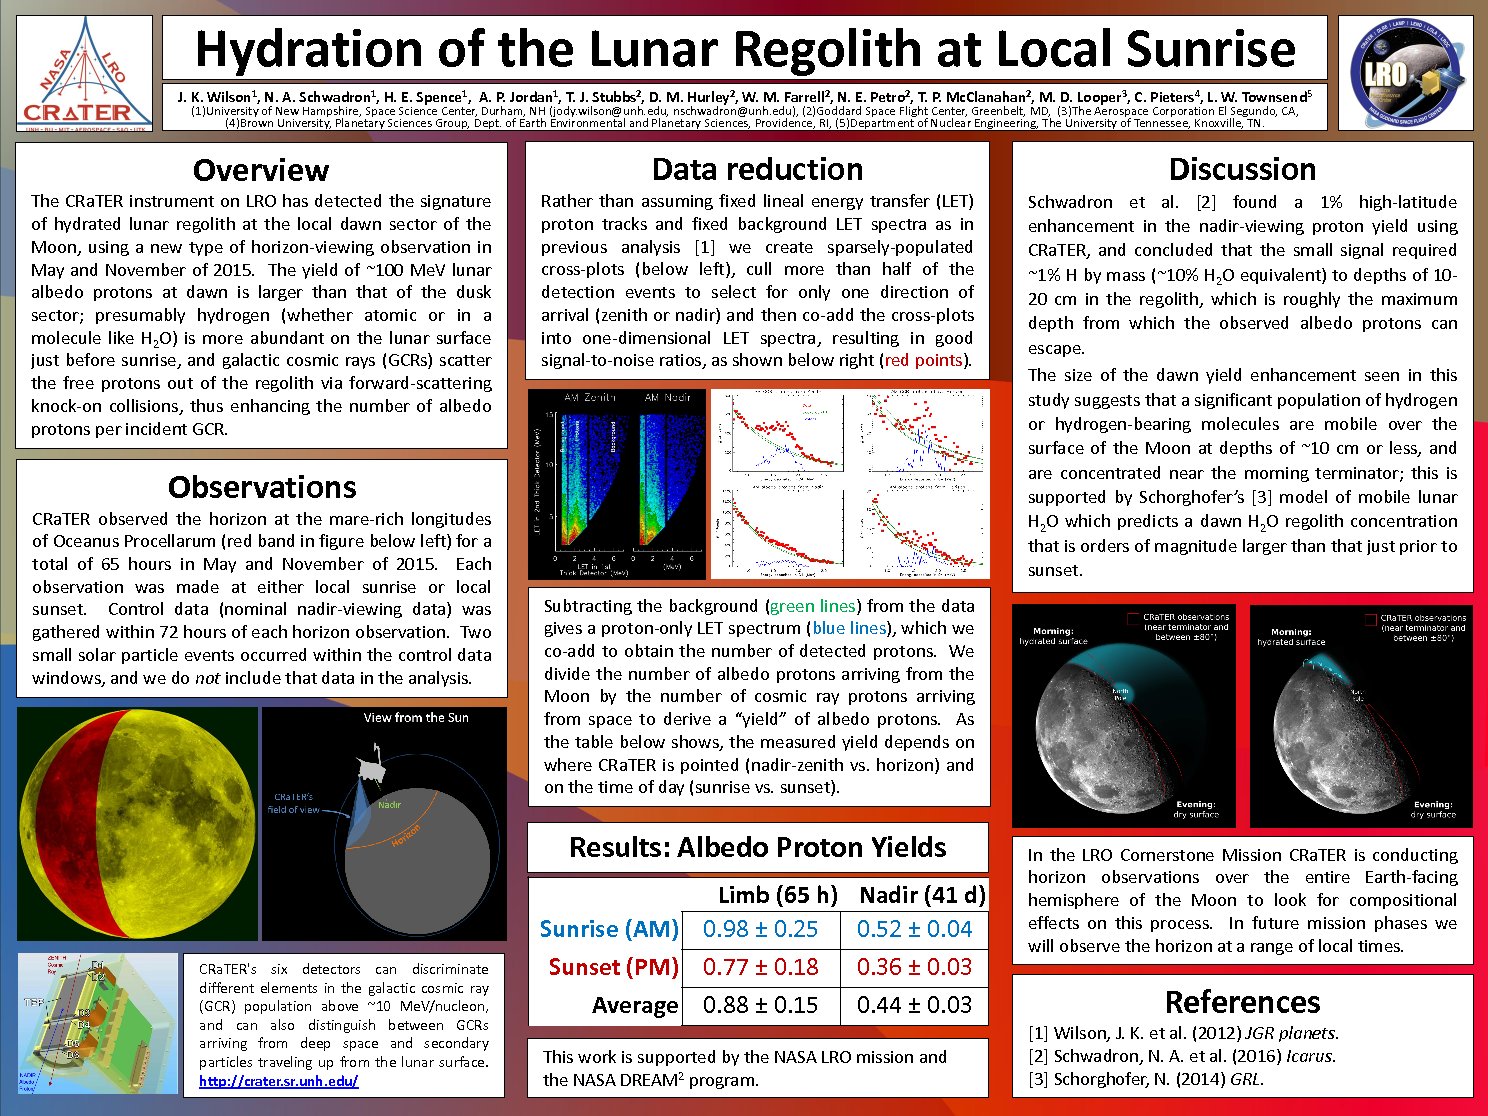 Hydration Of The Lunar Regolith At Local Sunrise by jkwilson